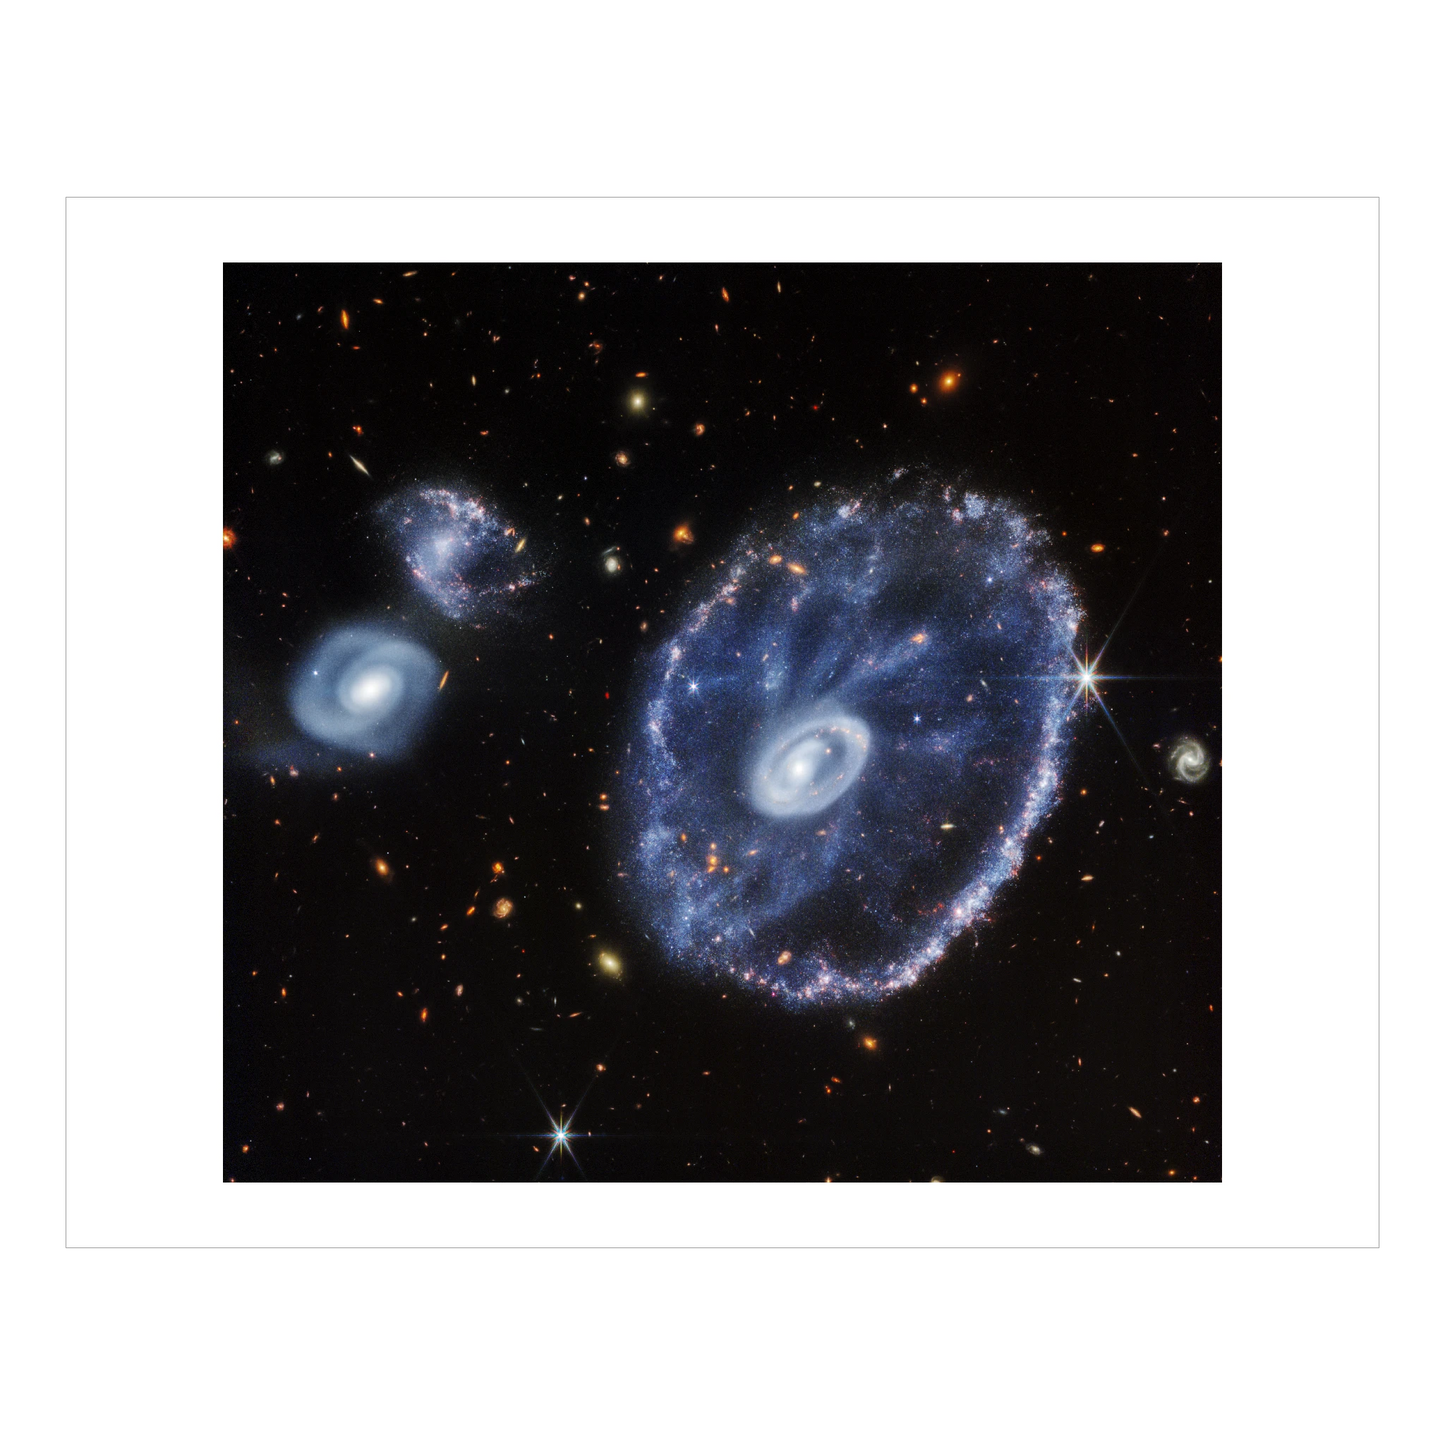 Cartwheel Galaxy - NIRCam